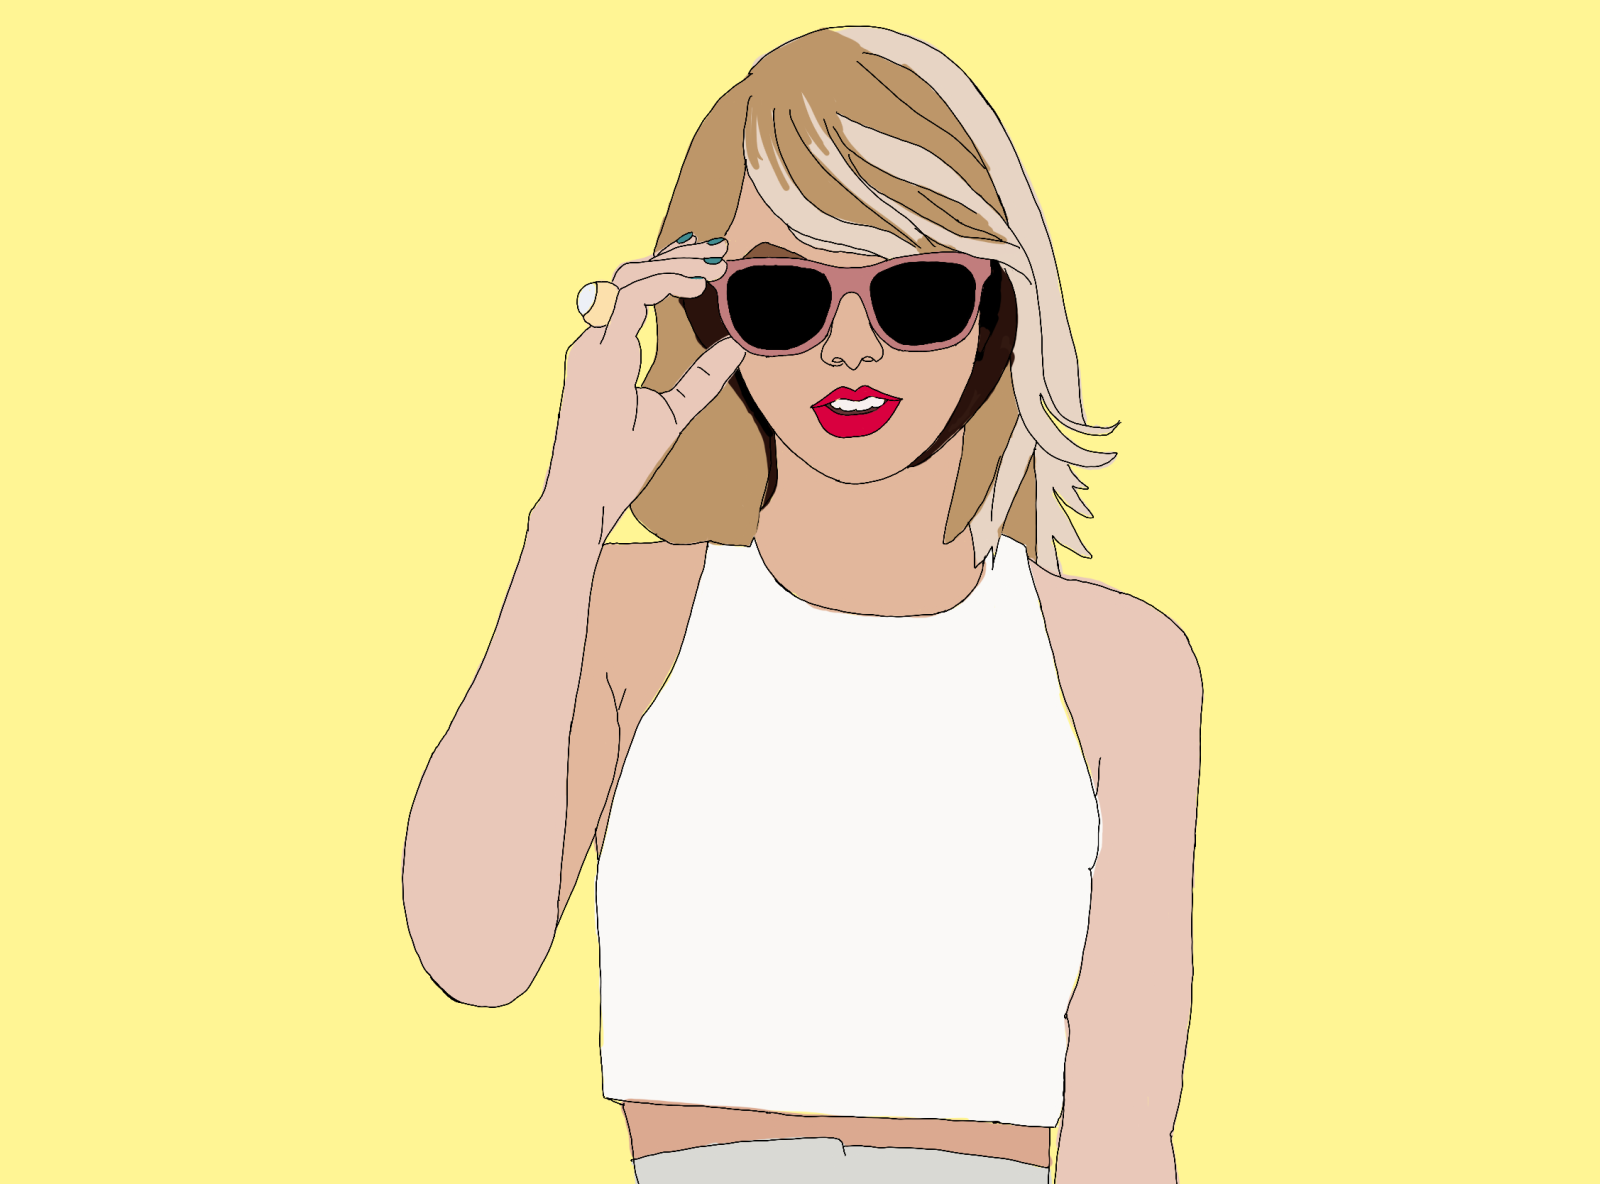 Taylor Swift Illustration by Michelle Plyem Kocin on Dribbble